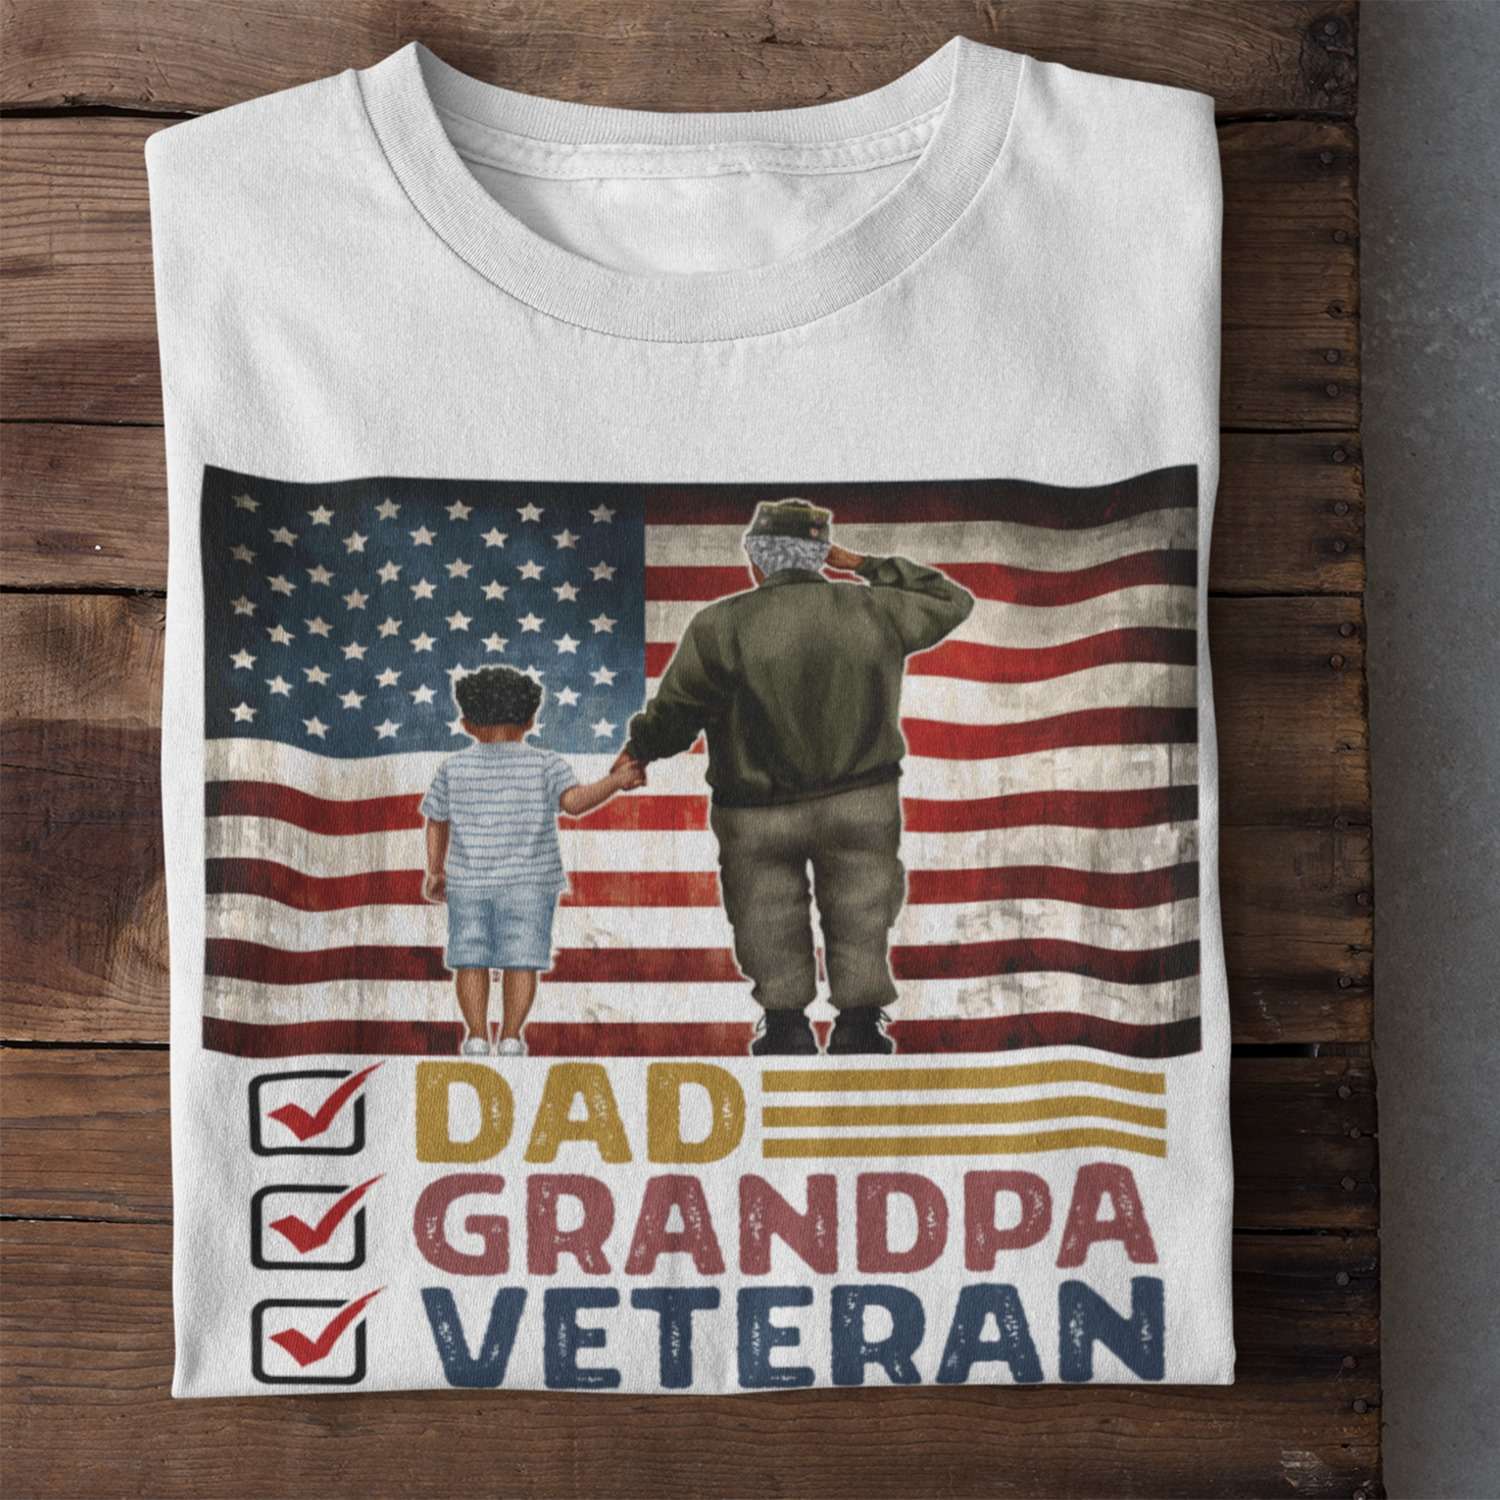 Đa grandpa veteran - Gift for American veterans, Grandpa and grandson